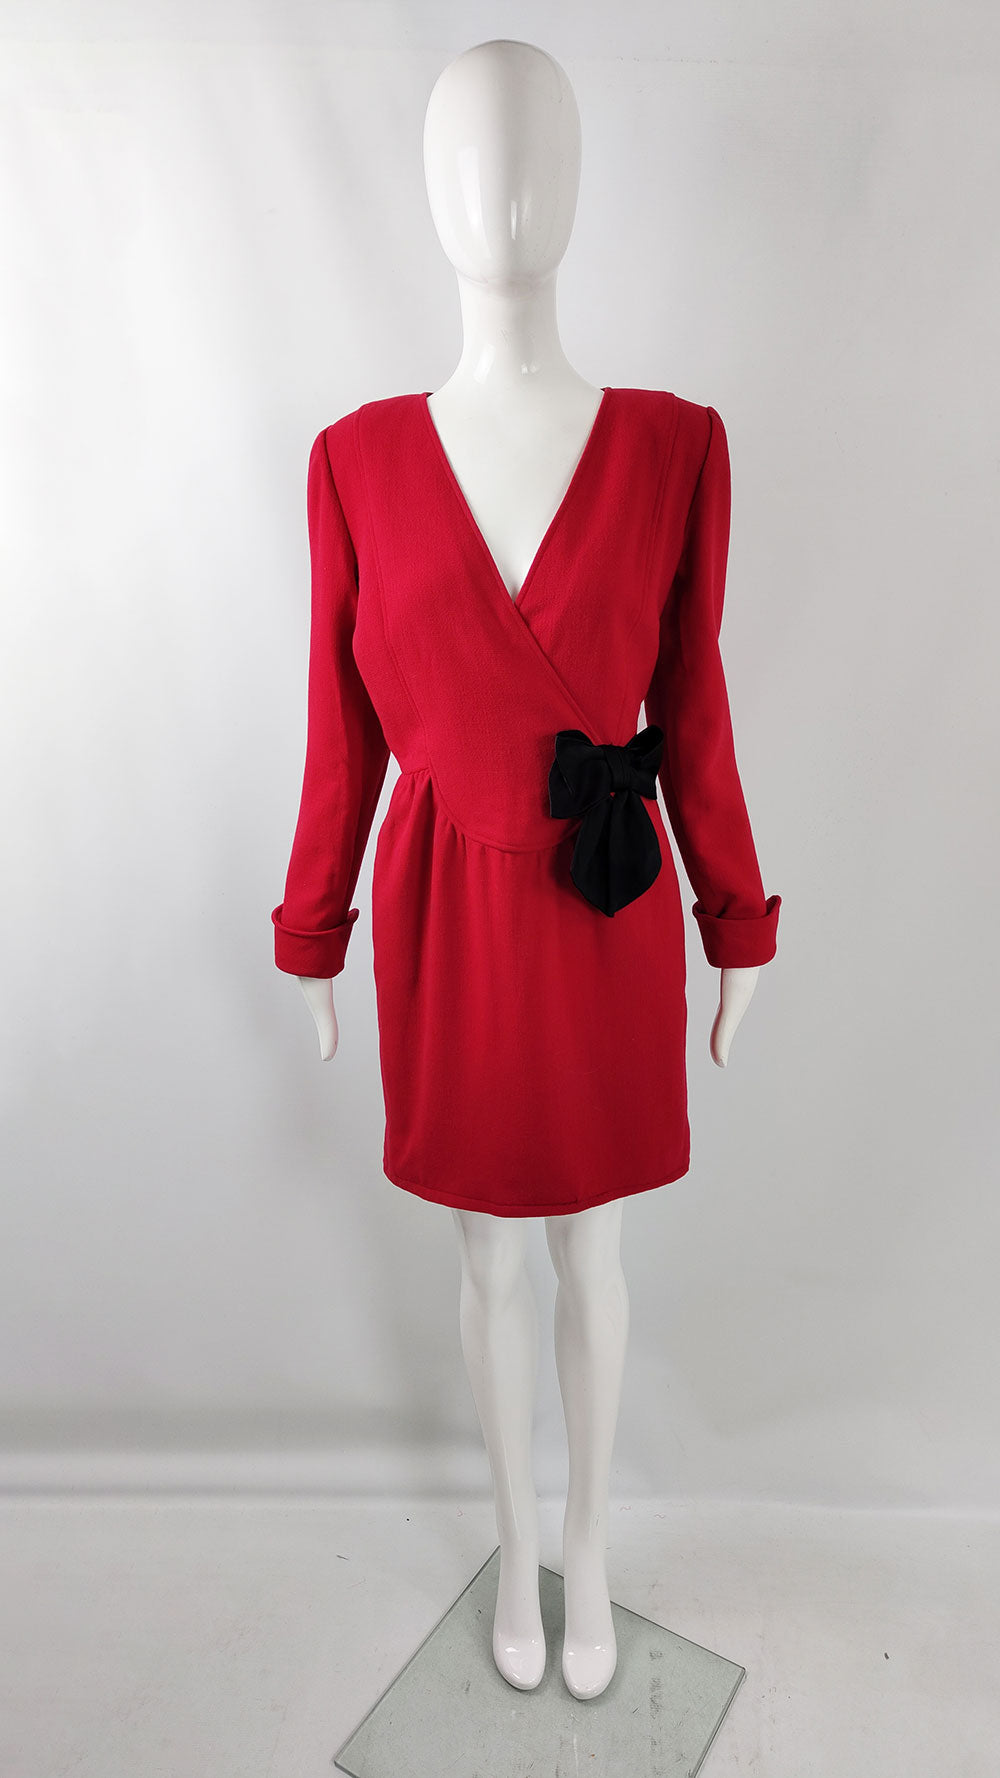 An image of a vintage Oscar de la Renta dress in a deep red crepe fabric.